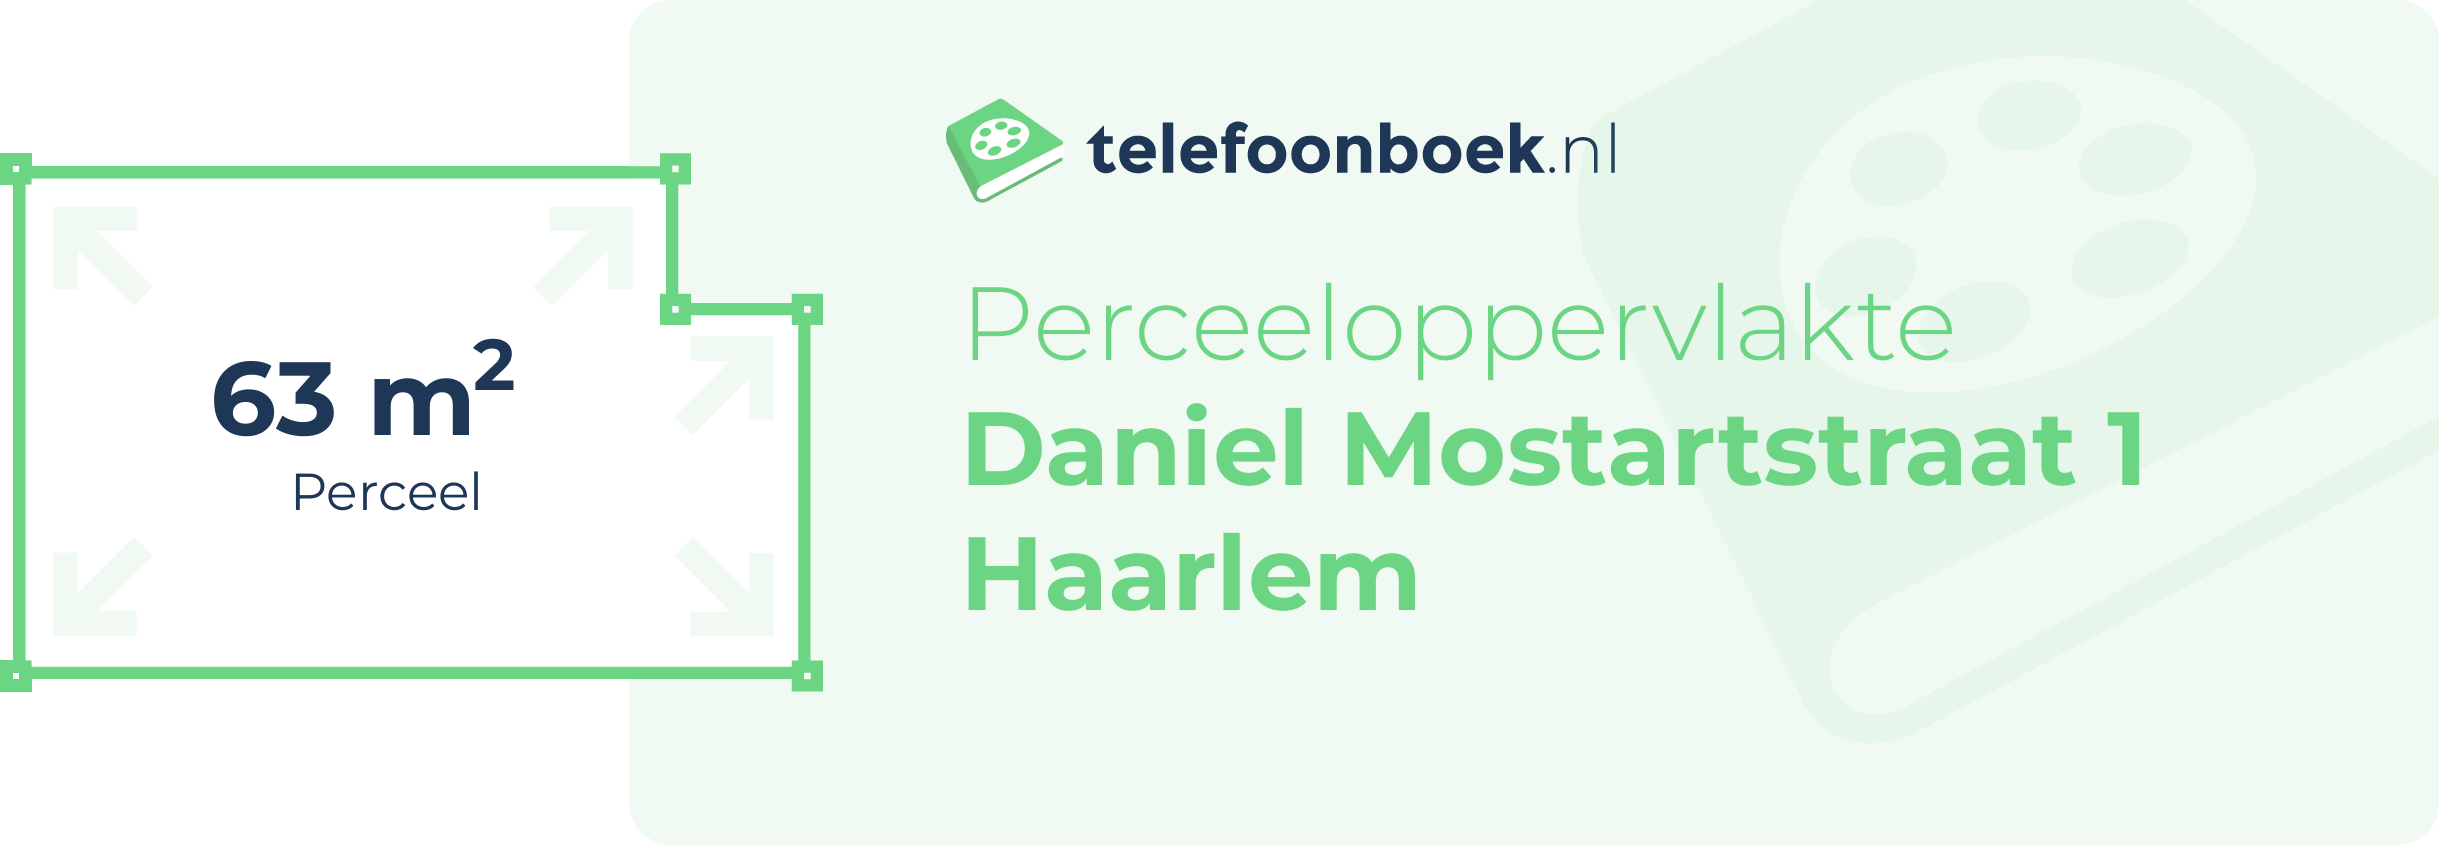 Perceeloppervlakte Daniel Mostartstraat 1 Haarlem